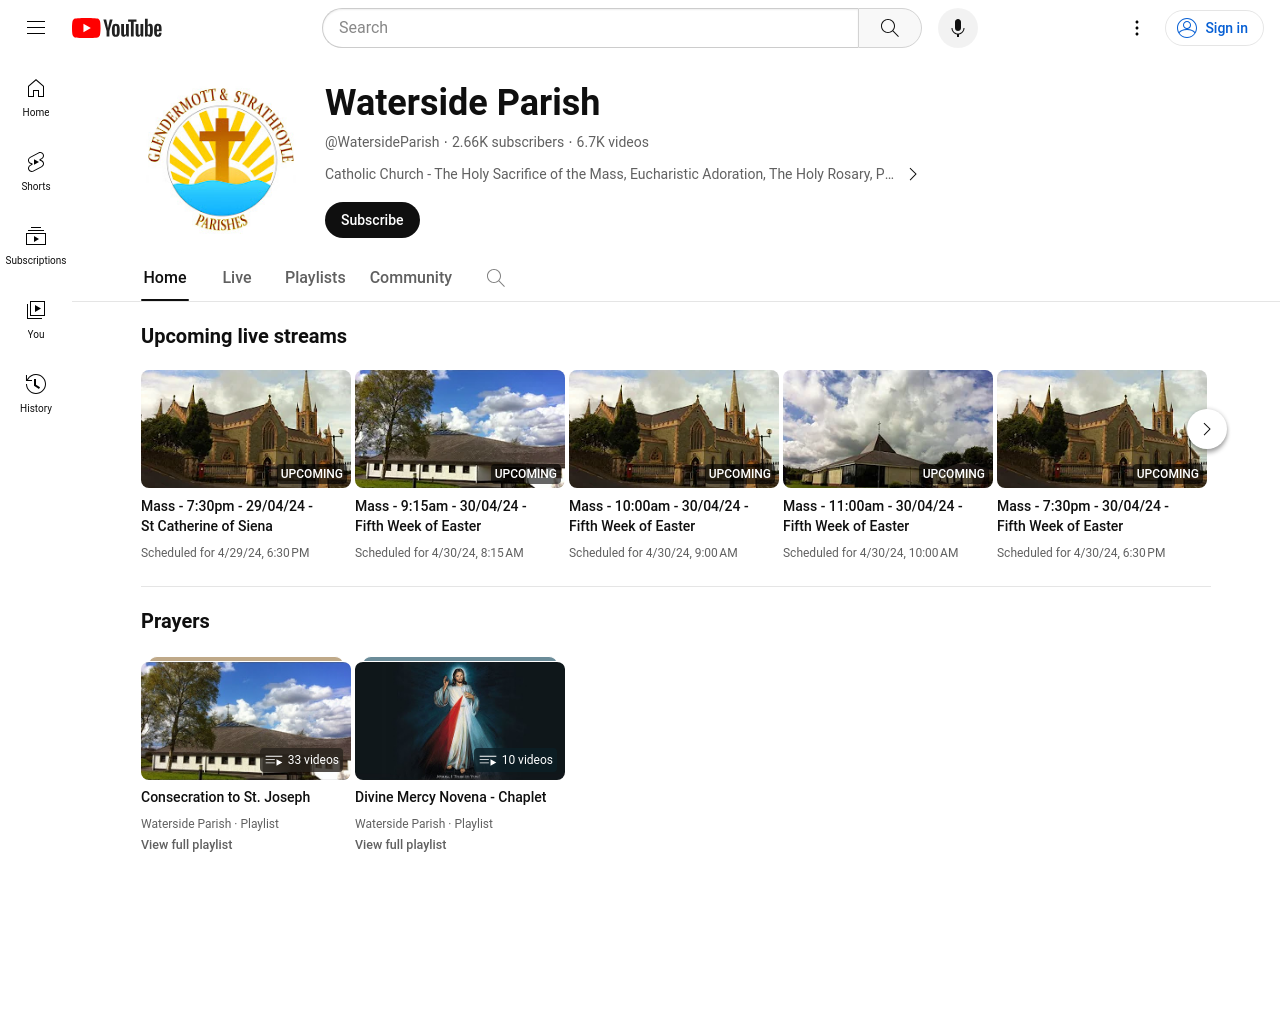 Waterside Parish You Tube Channel